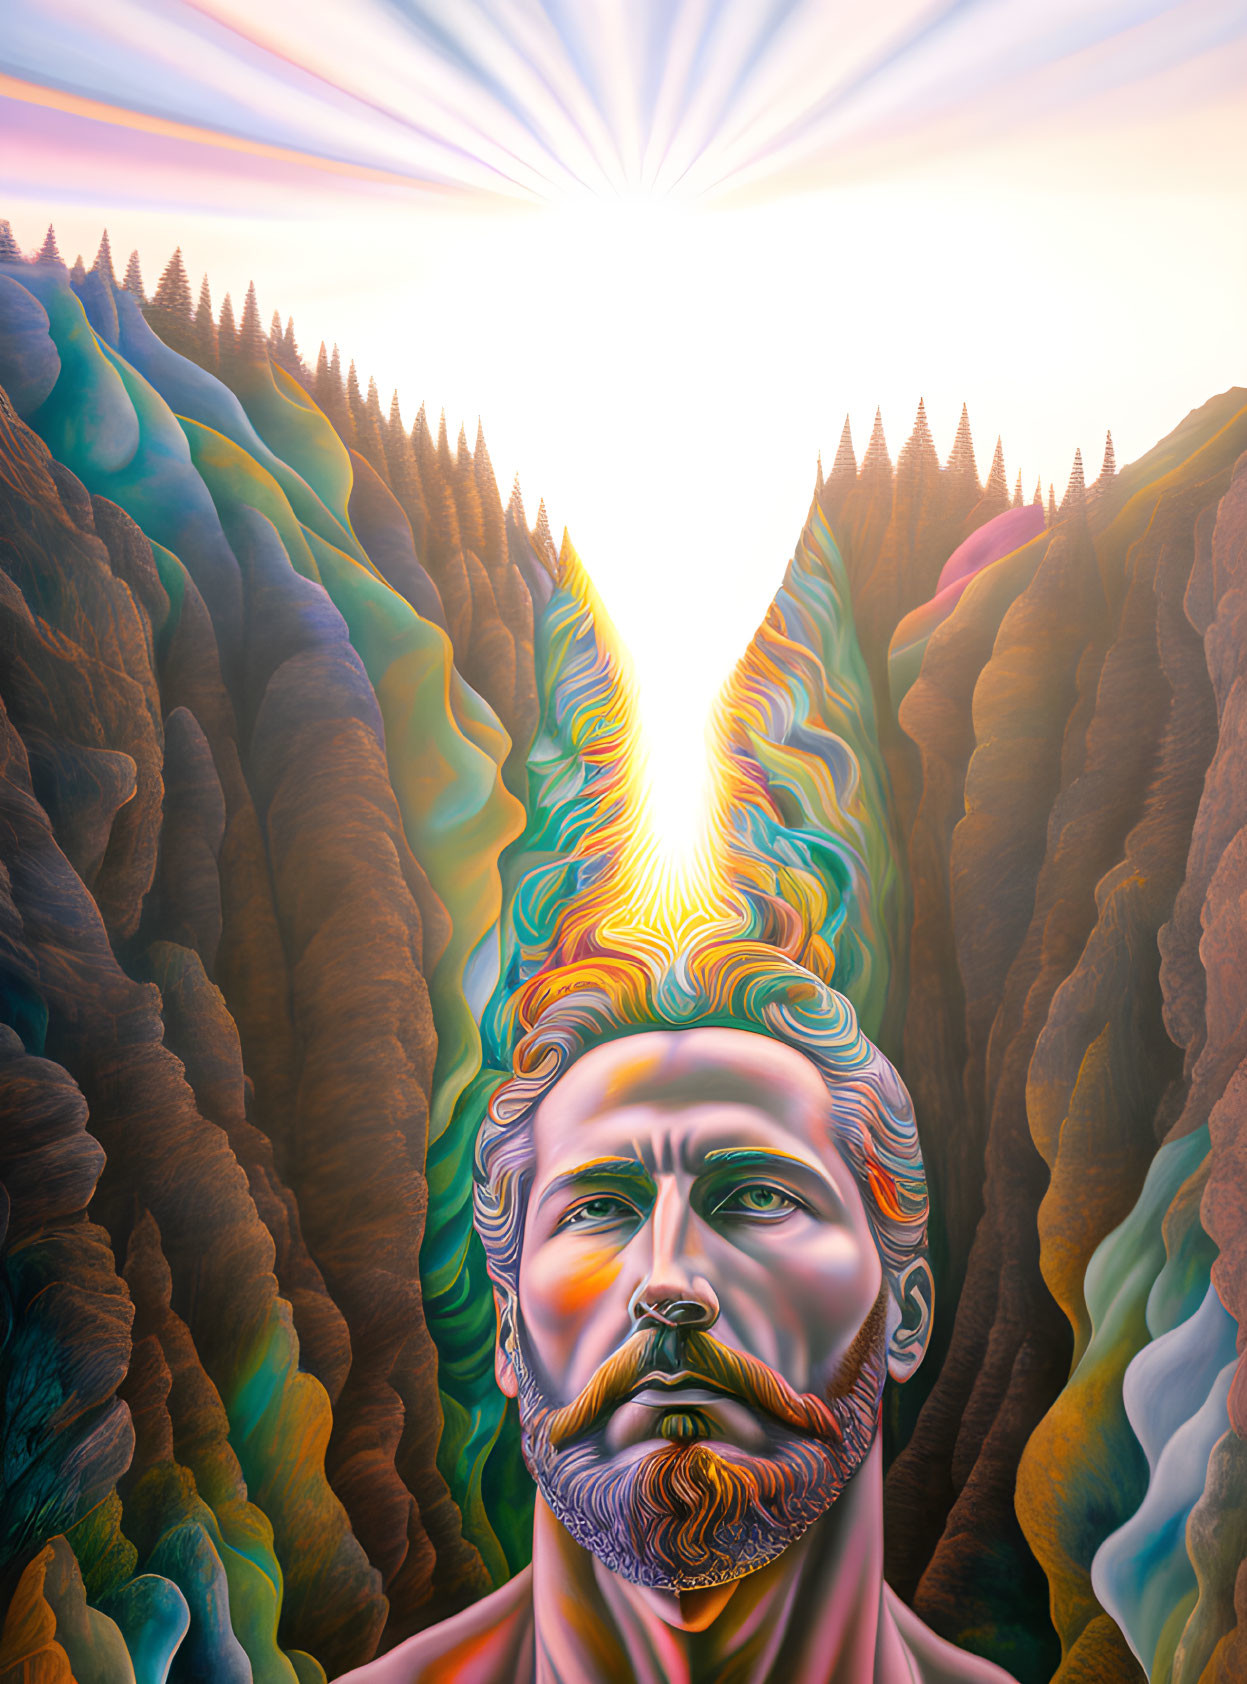 Colorful bearded man merges with mountain landscape under sunburst